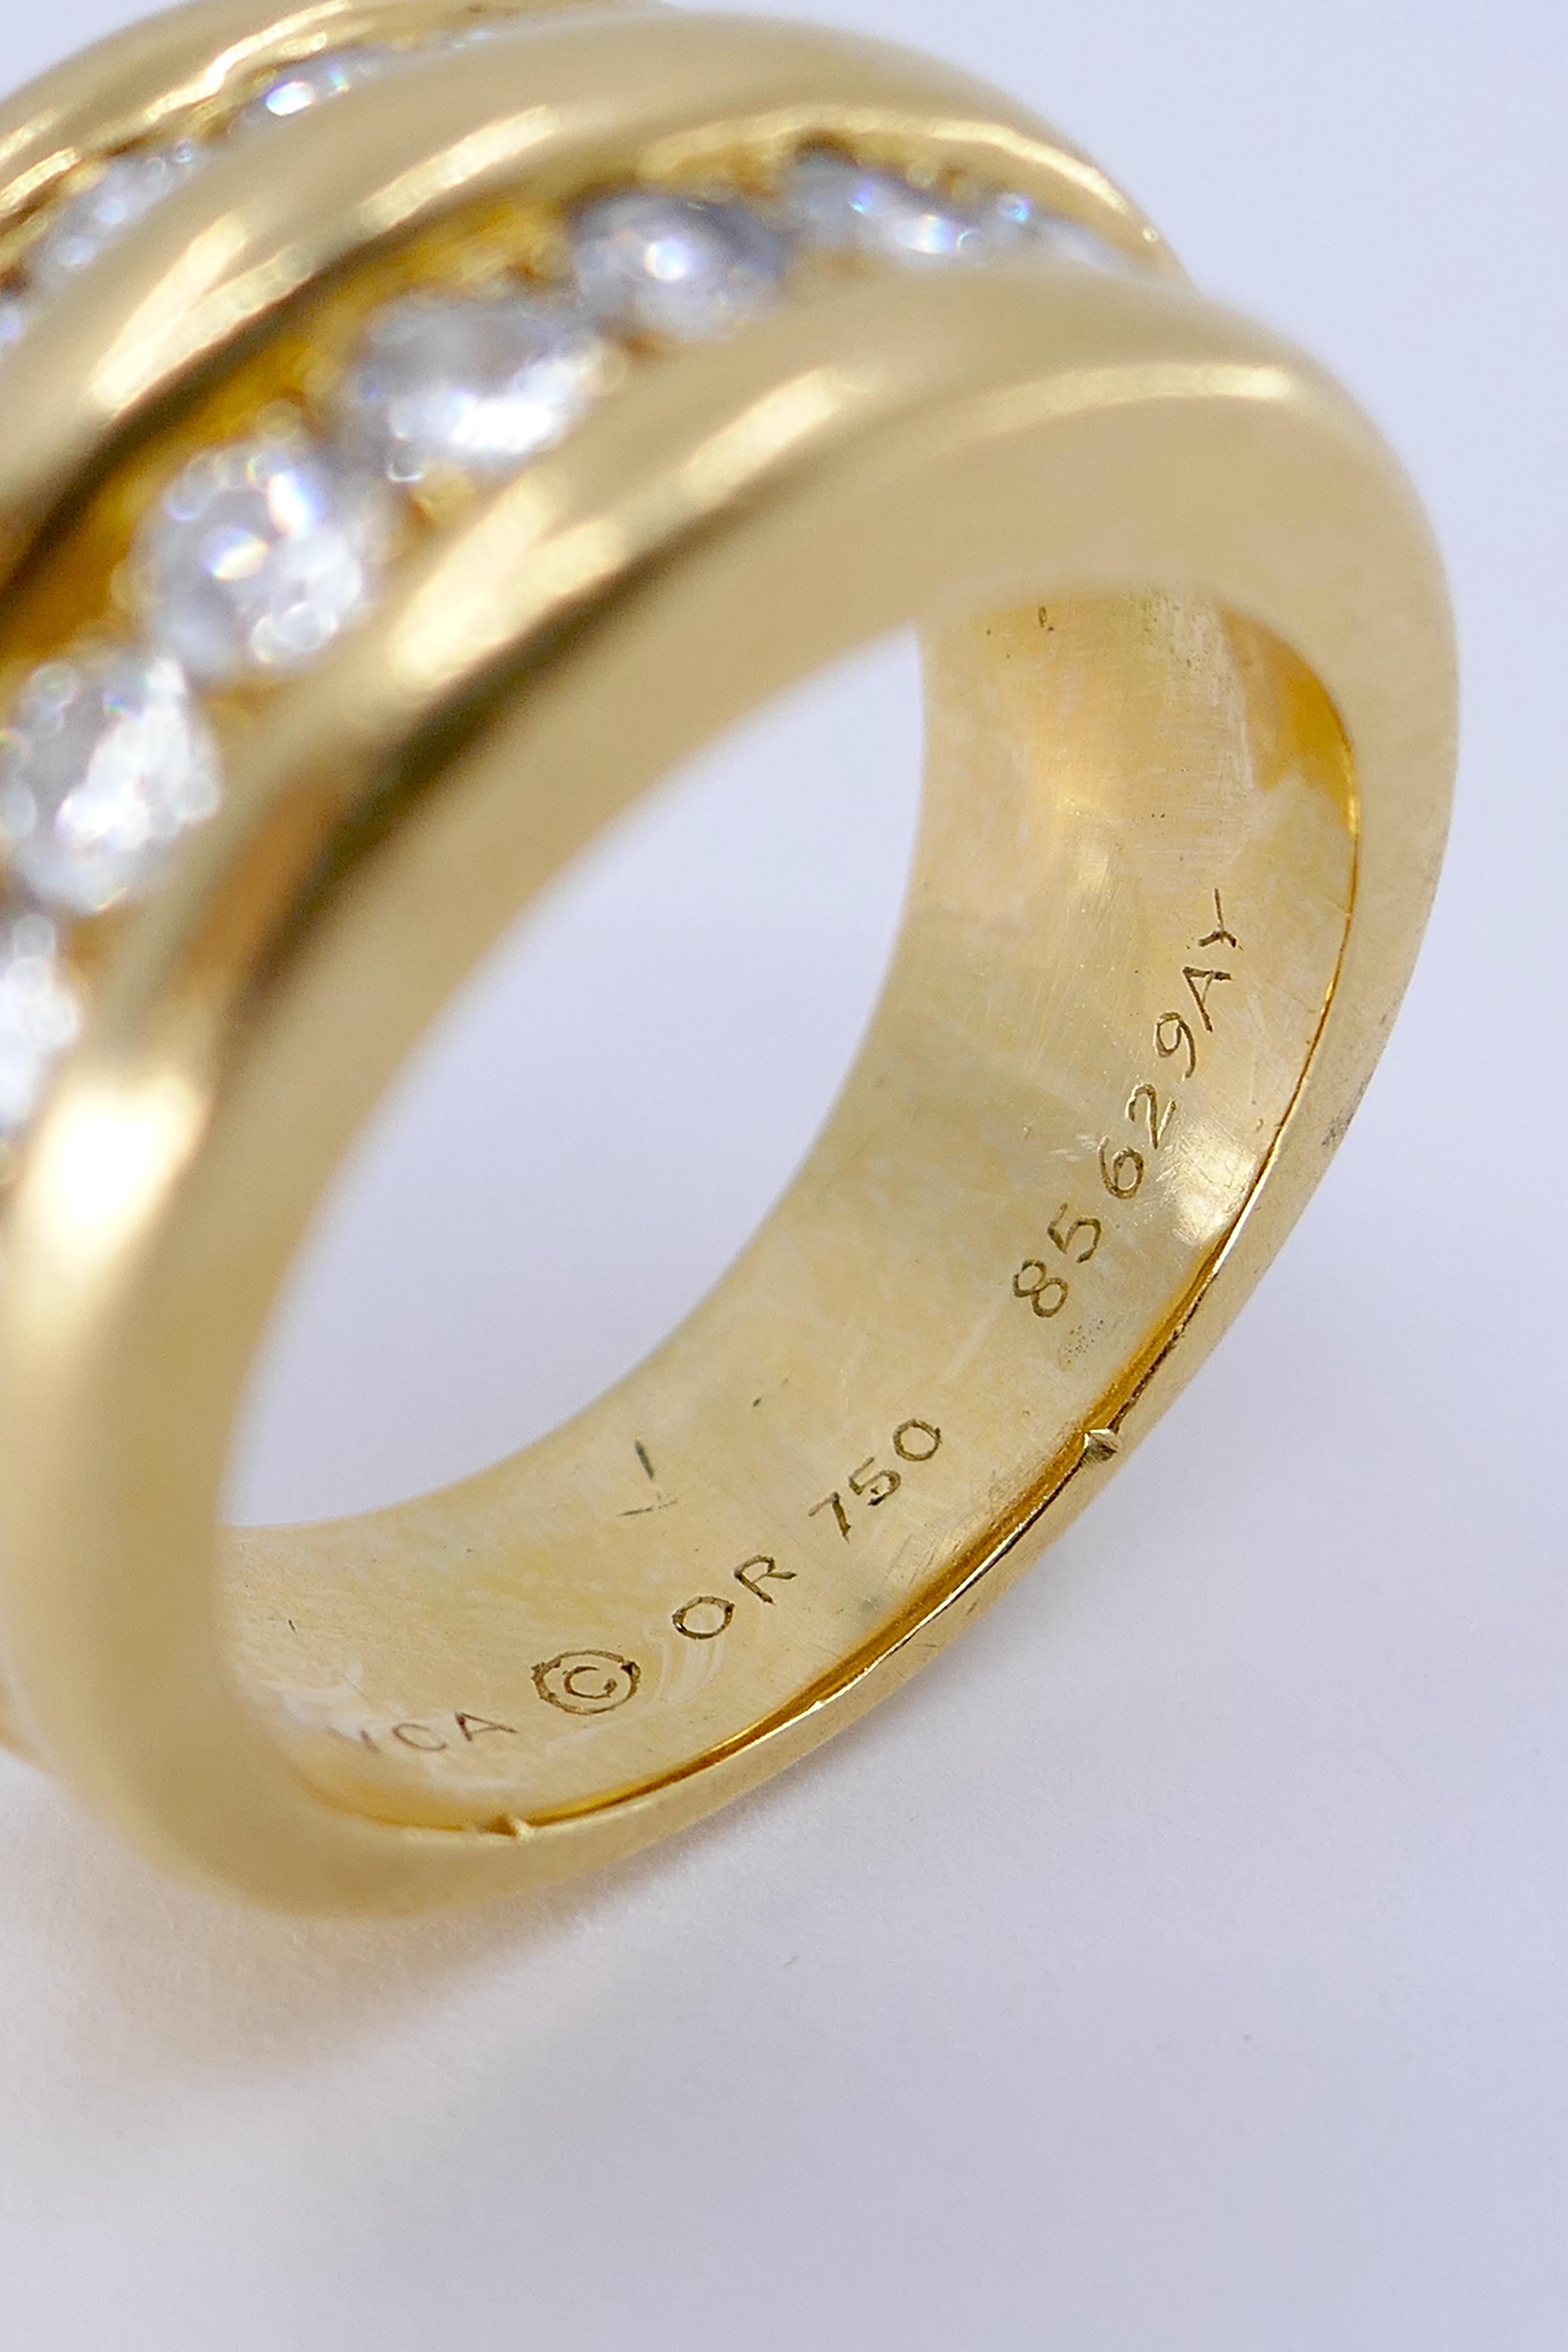 Brilliant Cut Van Cleef & Arpels Diamond Ring 18k Gold size 6.25